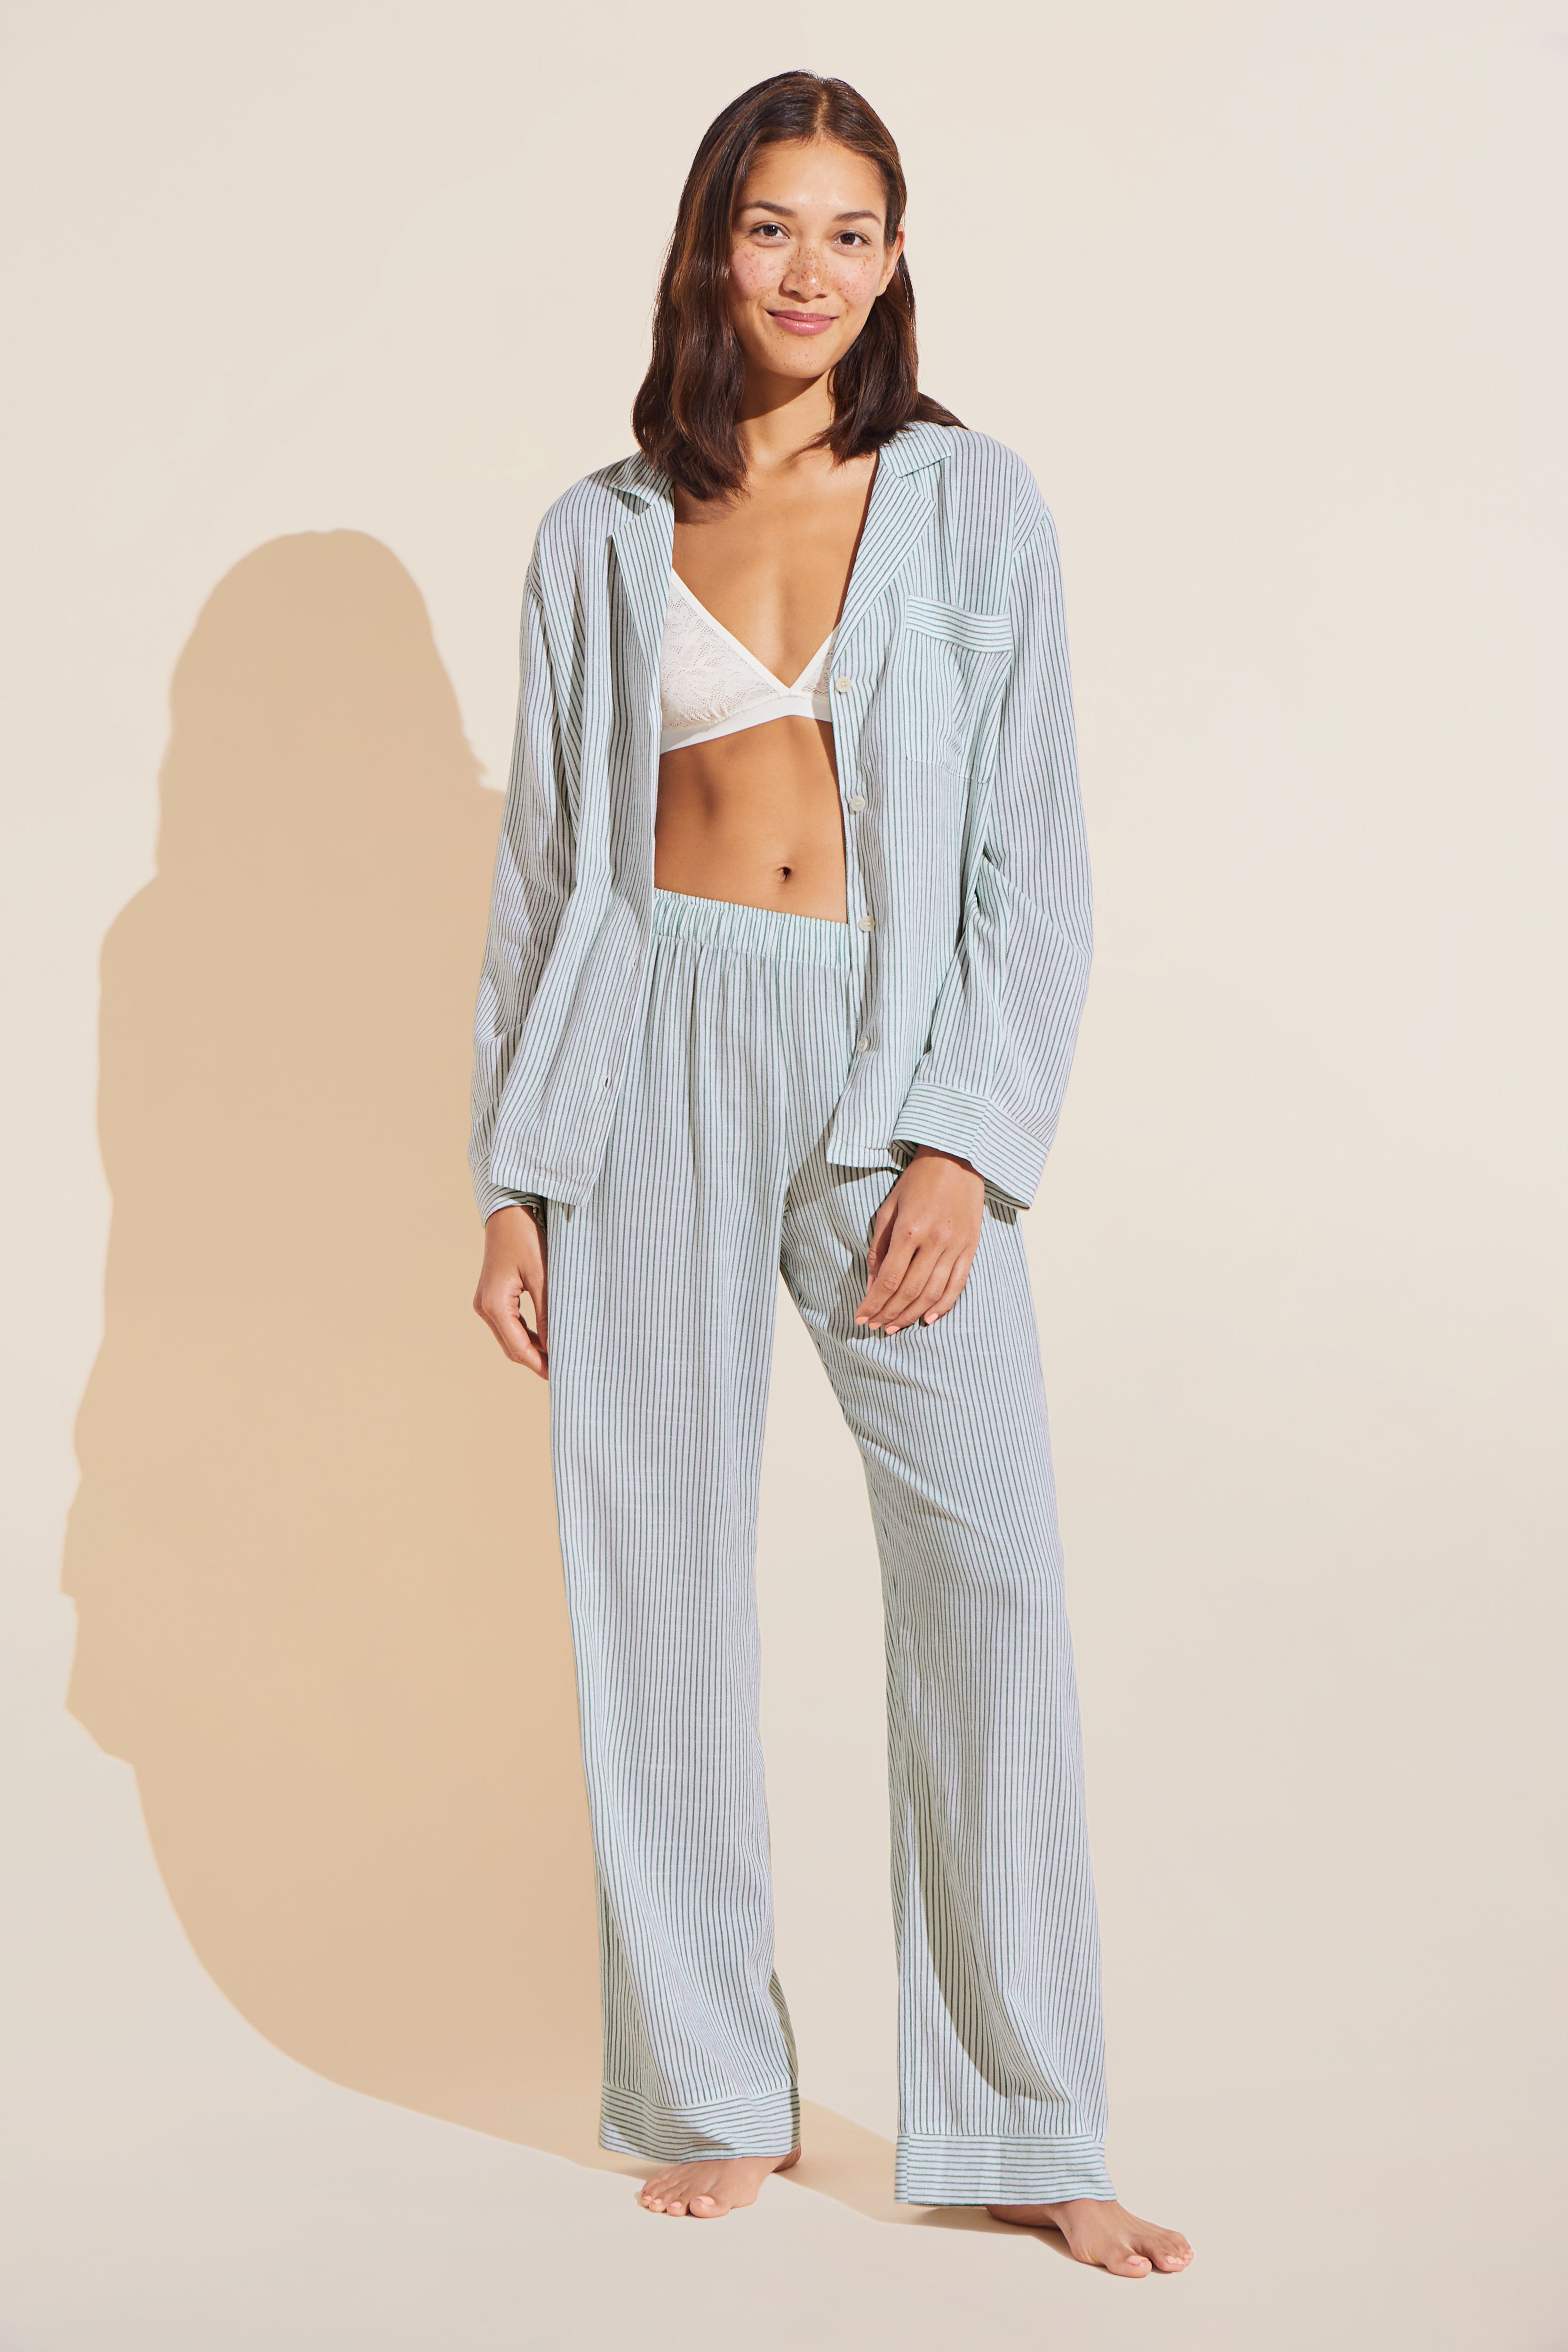 Eberjey  Pajamas, Loungewear, Washable Silk, Robes & More